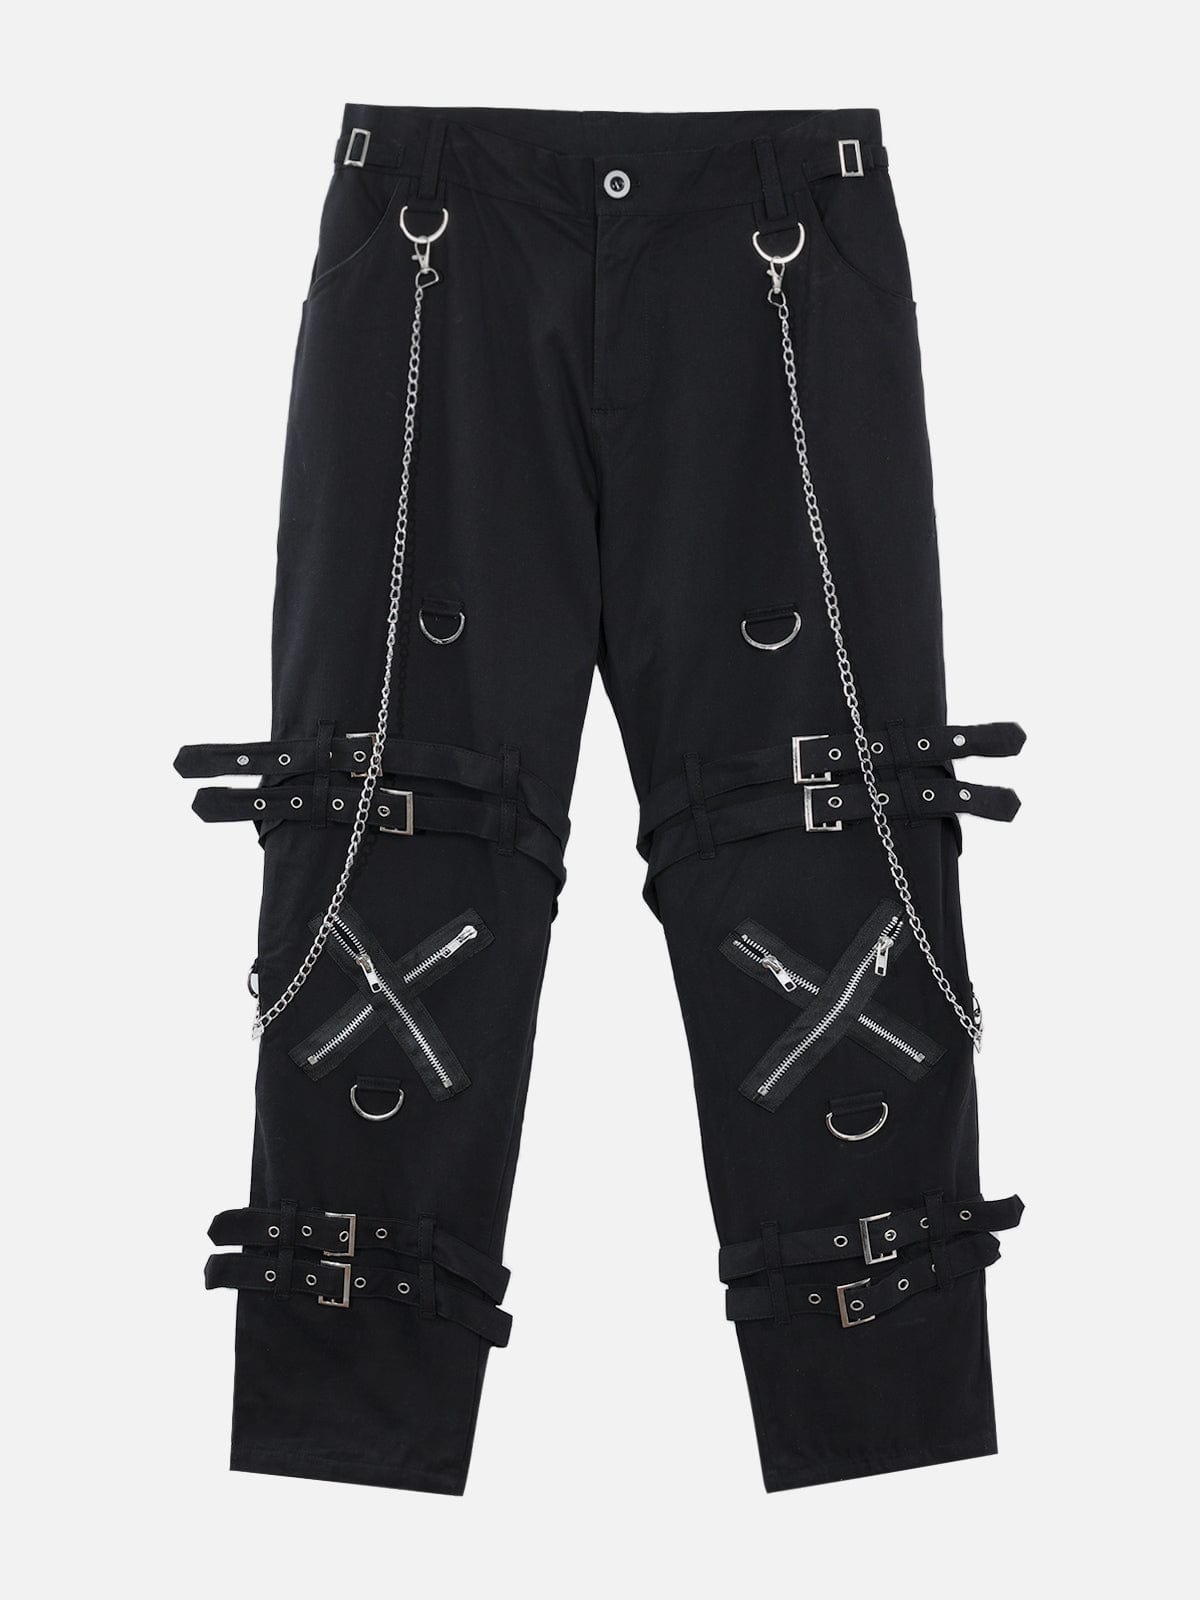 Punk Metal Buckle Chain Pants Streetwear Brand Techwear Combat Tactical YUGEN THEORY